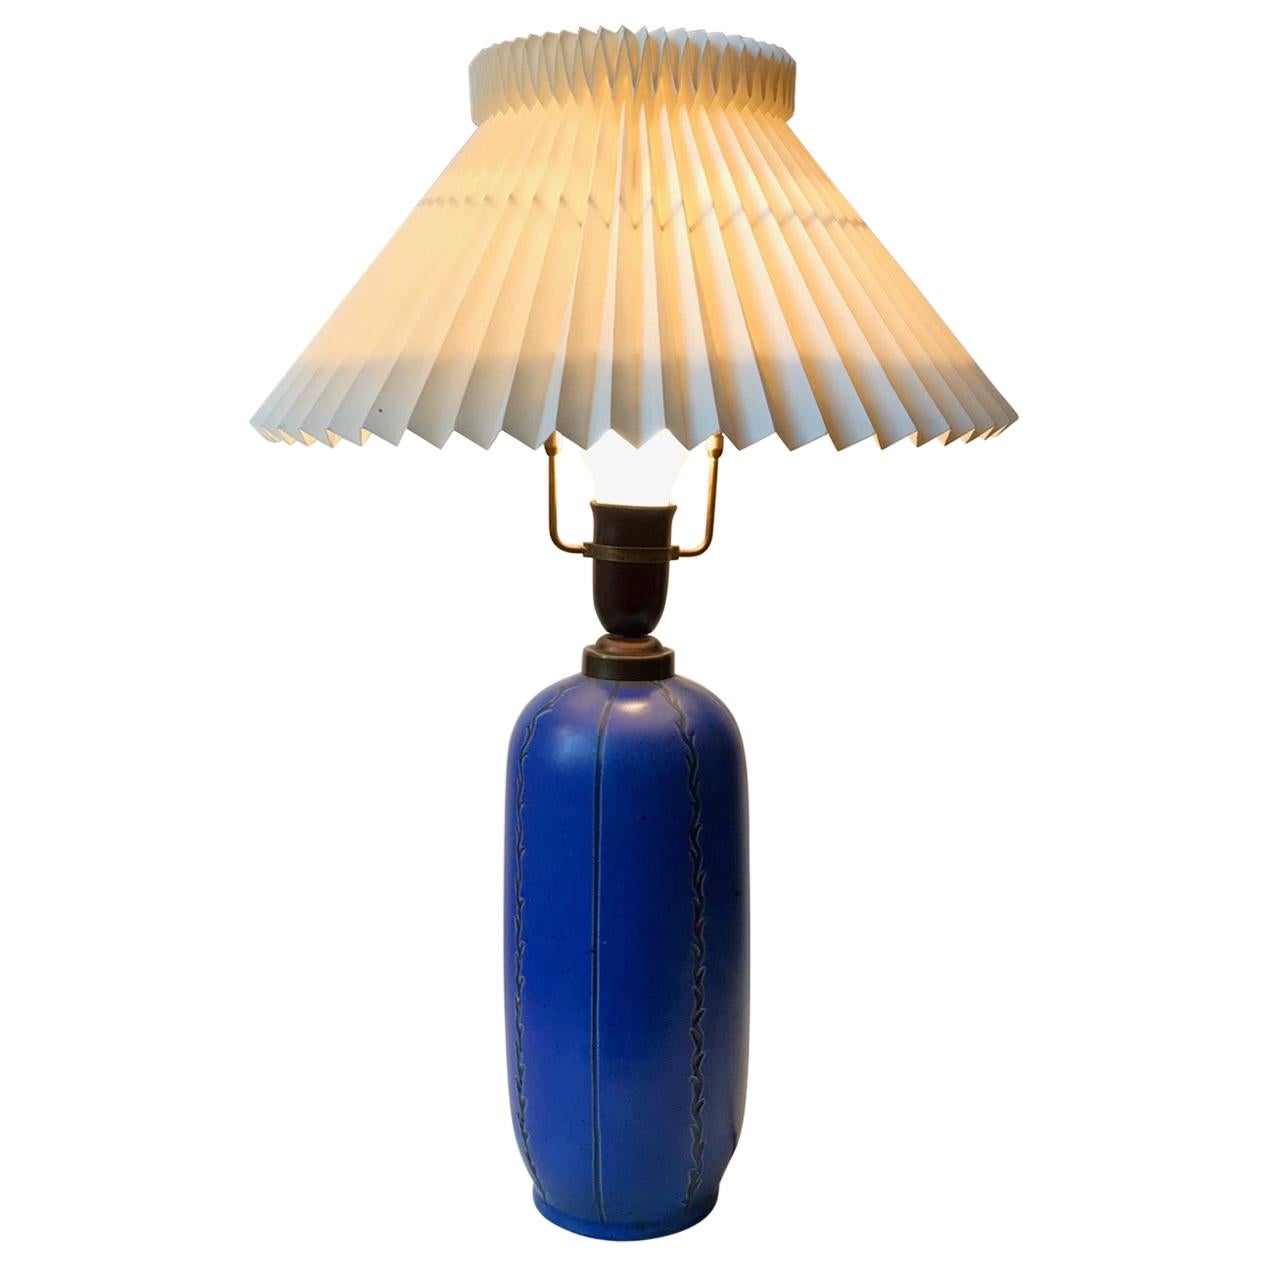 Blue Ceramic Art Deco Table Lamp by Søholm, Denmark, circa 1940 For Sale